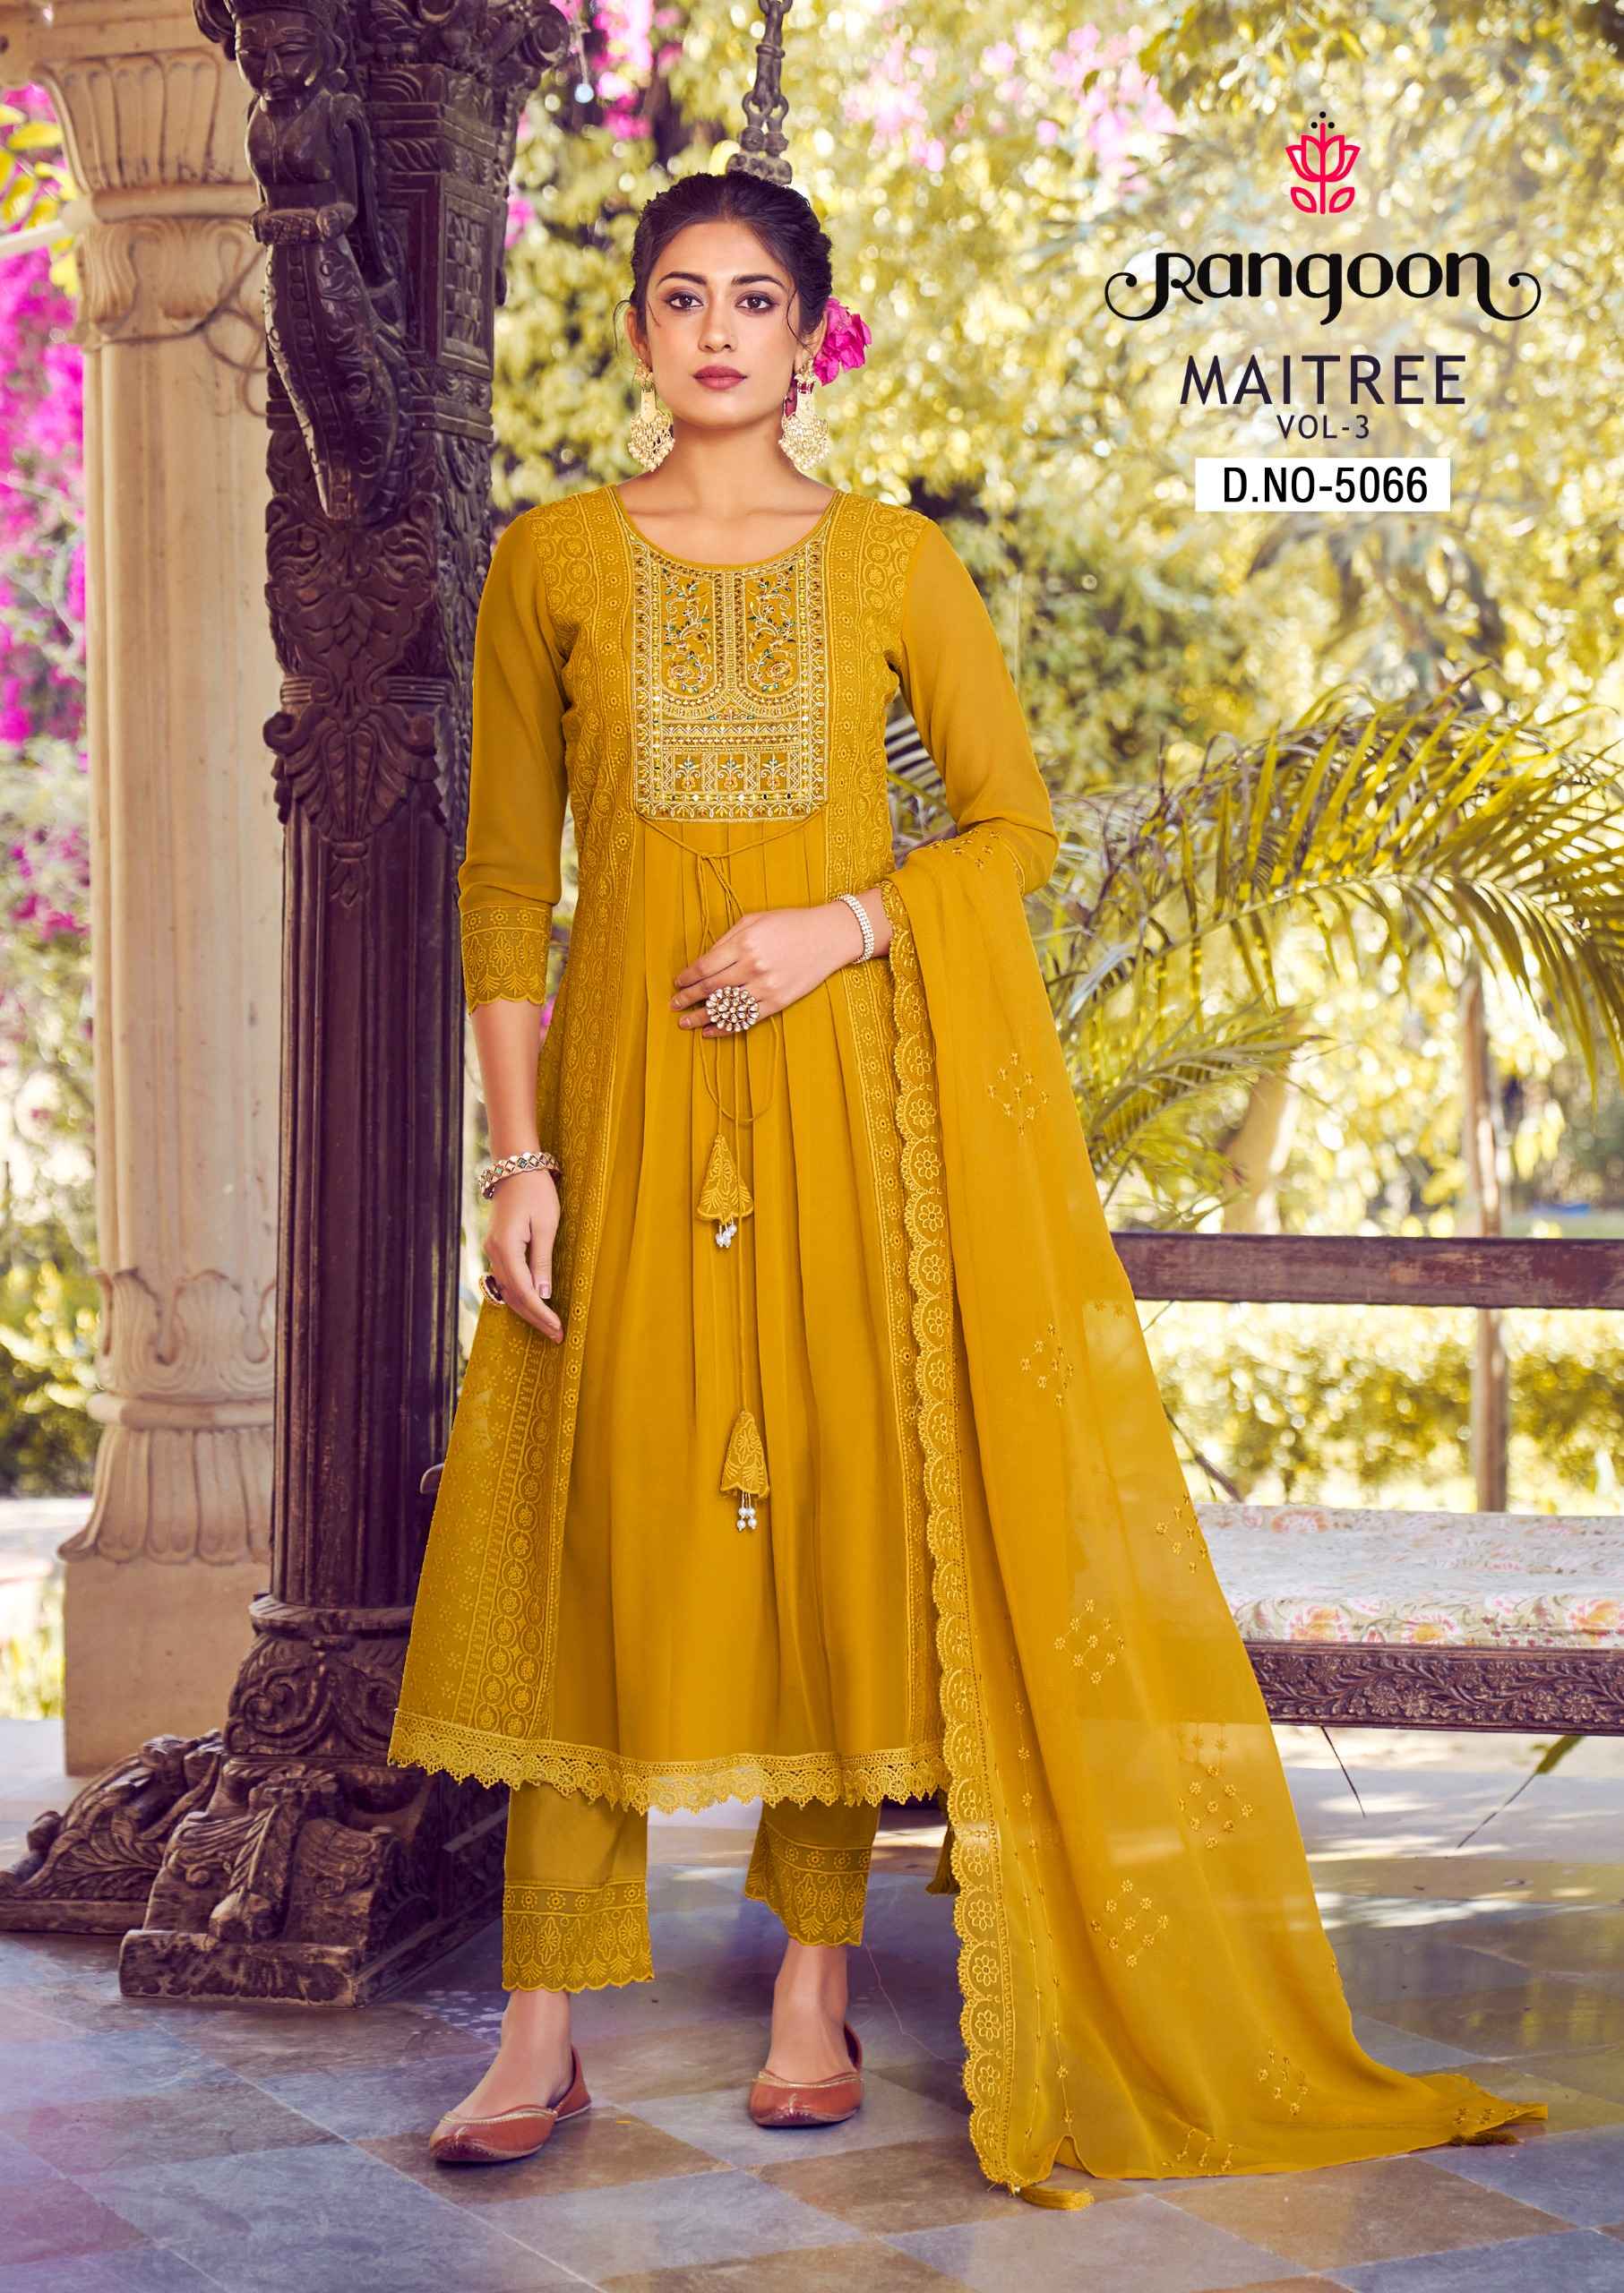 Rangoon Maitree Vol-3 Sifli Readymade Georgette Suit (6 pcs Catalogue)